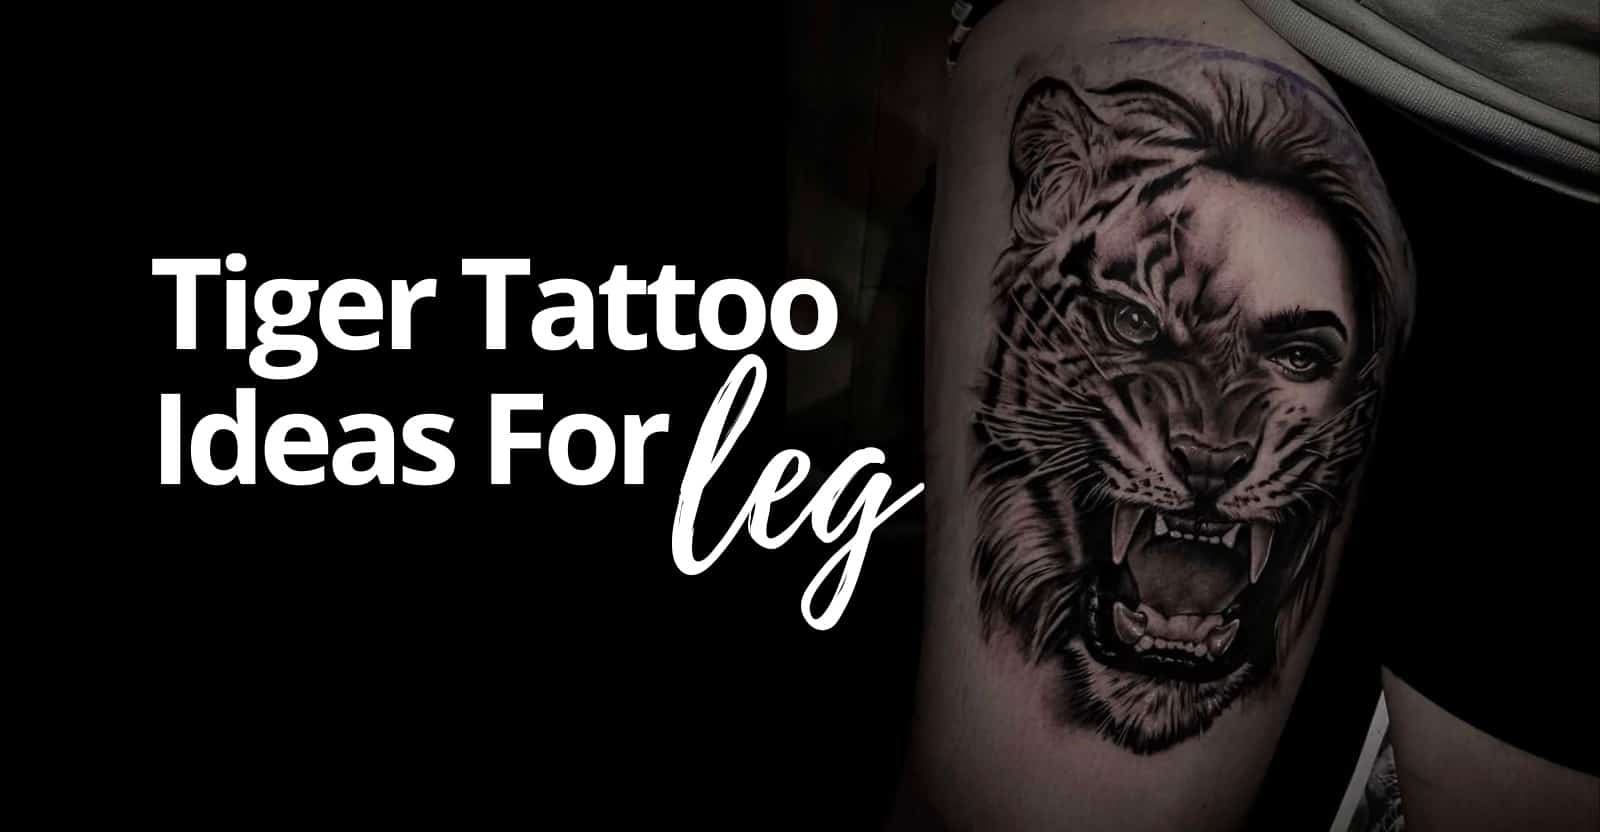 Striking Tiger Tattoo Design Ideas For Your Leg | Make A Bold Statement